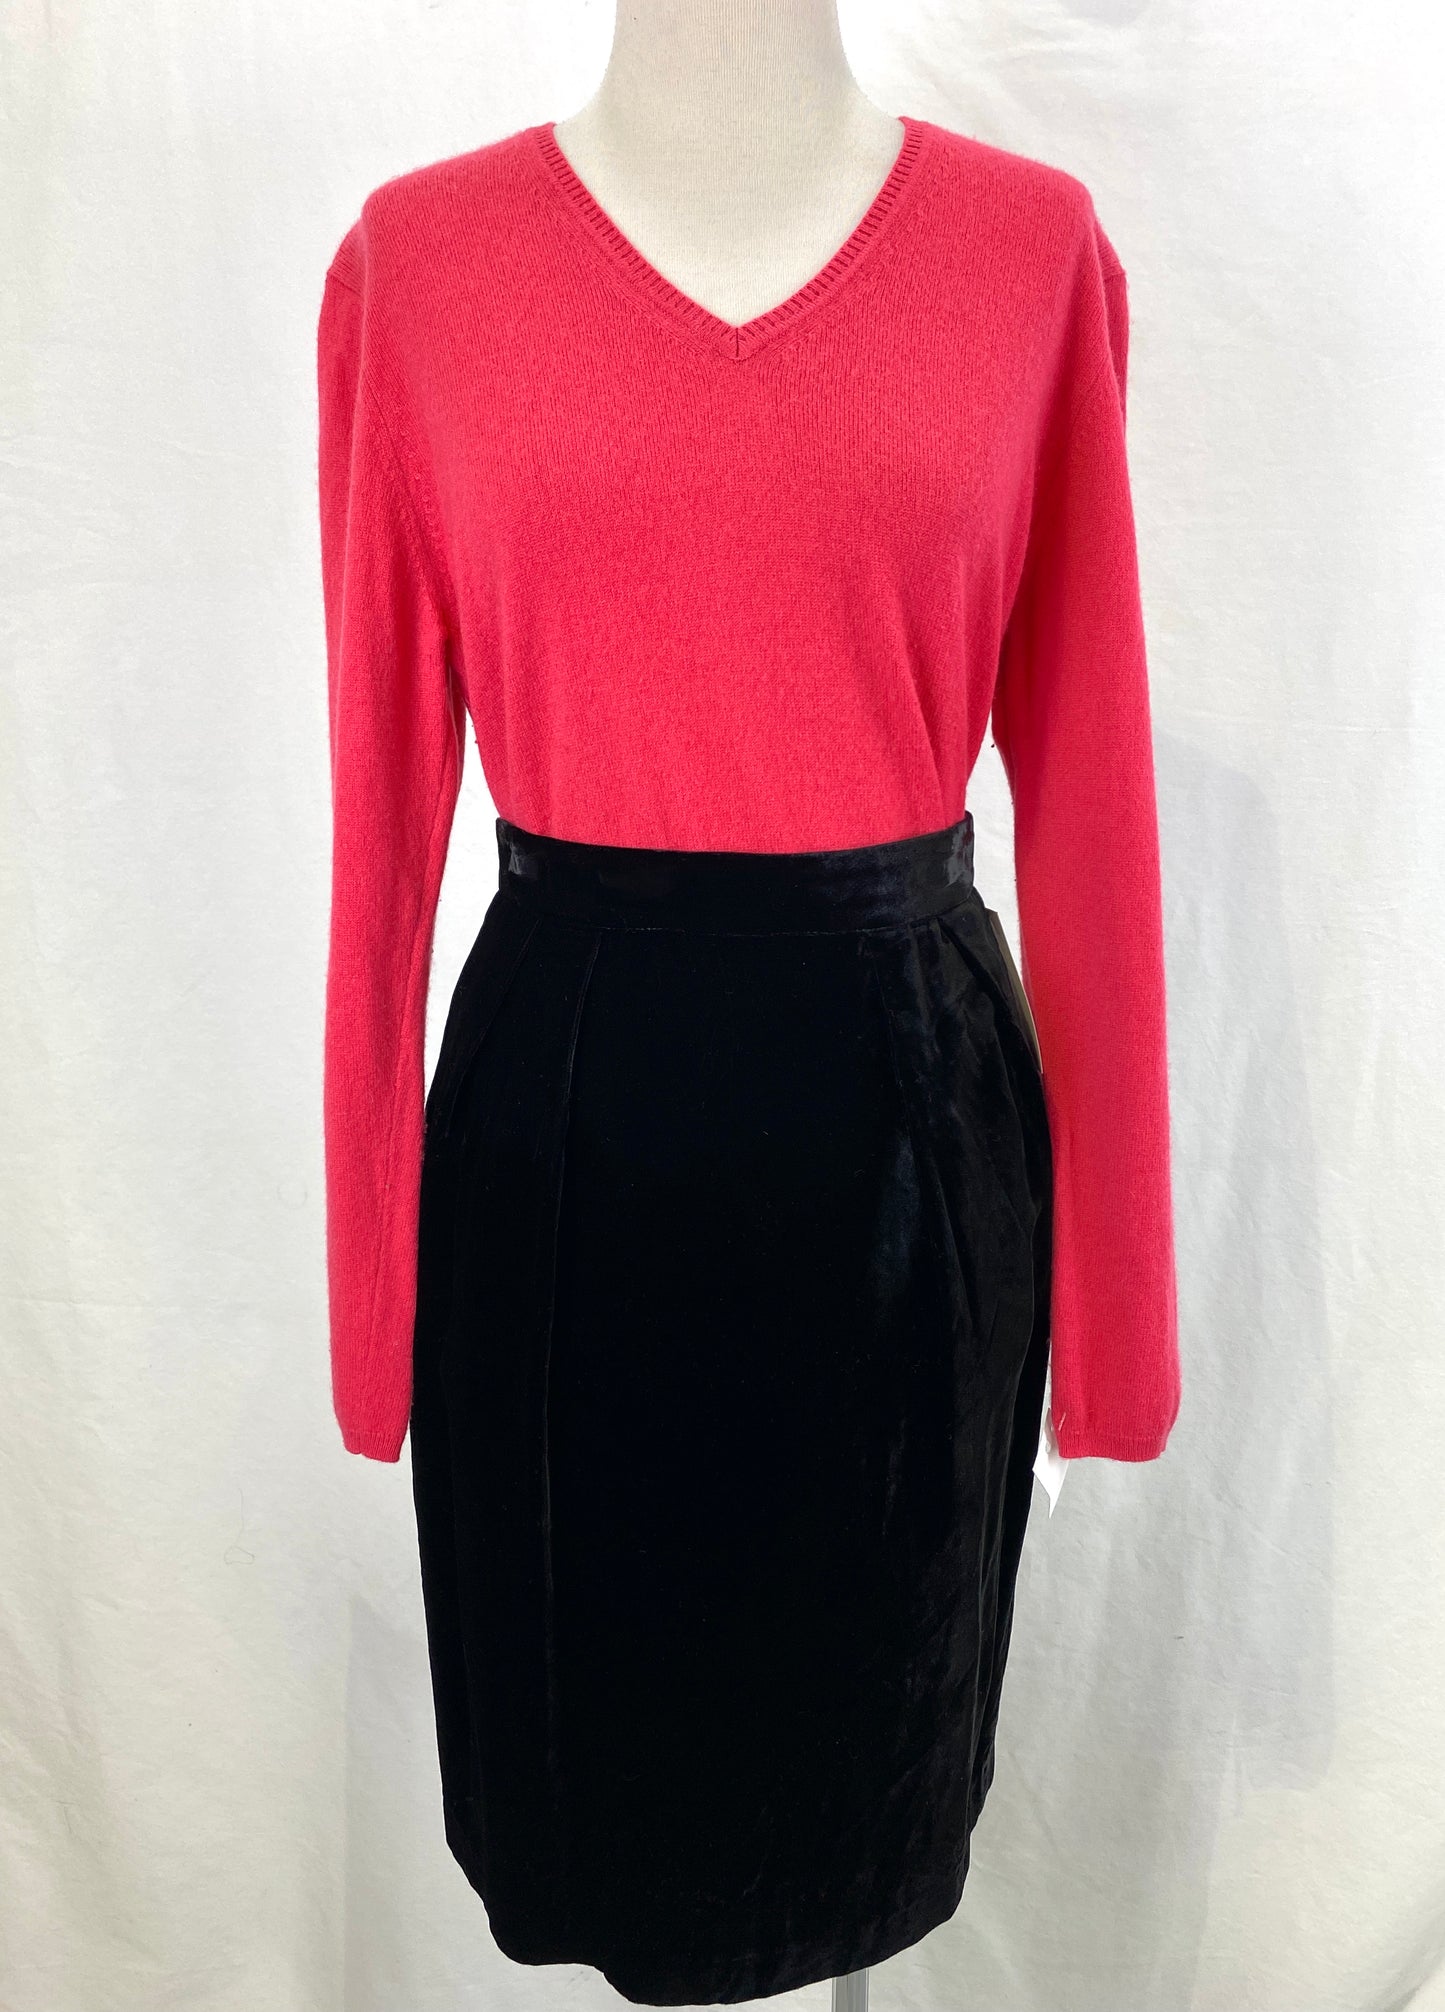 Pink V-neck vintage cashmere sweater tucked into a black skirt. Ian Drummond Vintage. 